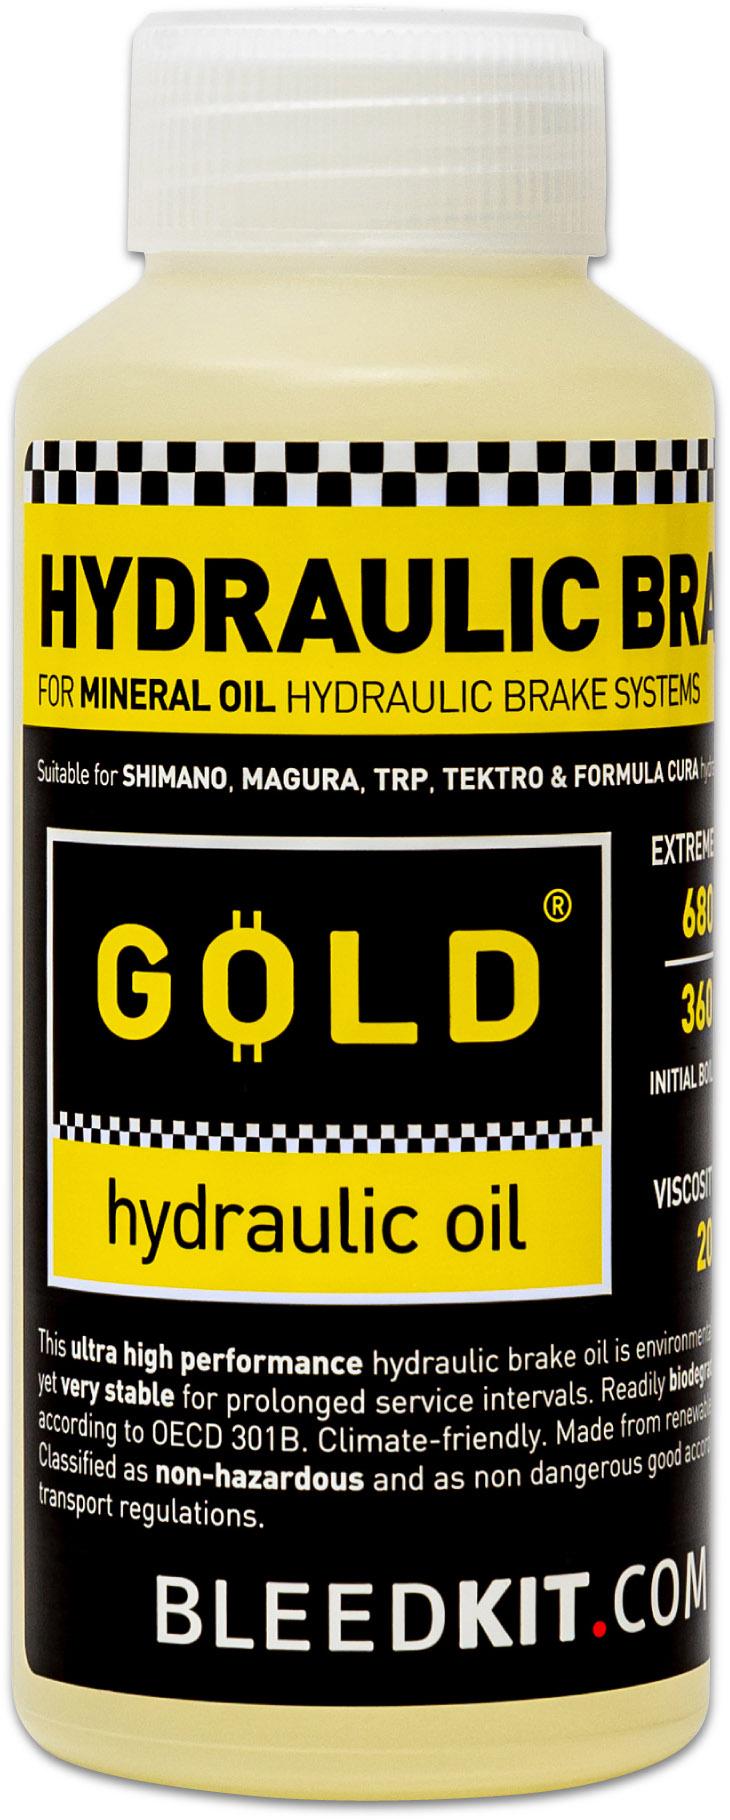 Image of Bleed Kit Hydraulic Brake Fluid (100ml) - Gold Fluid